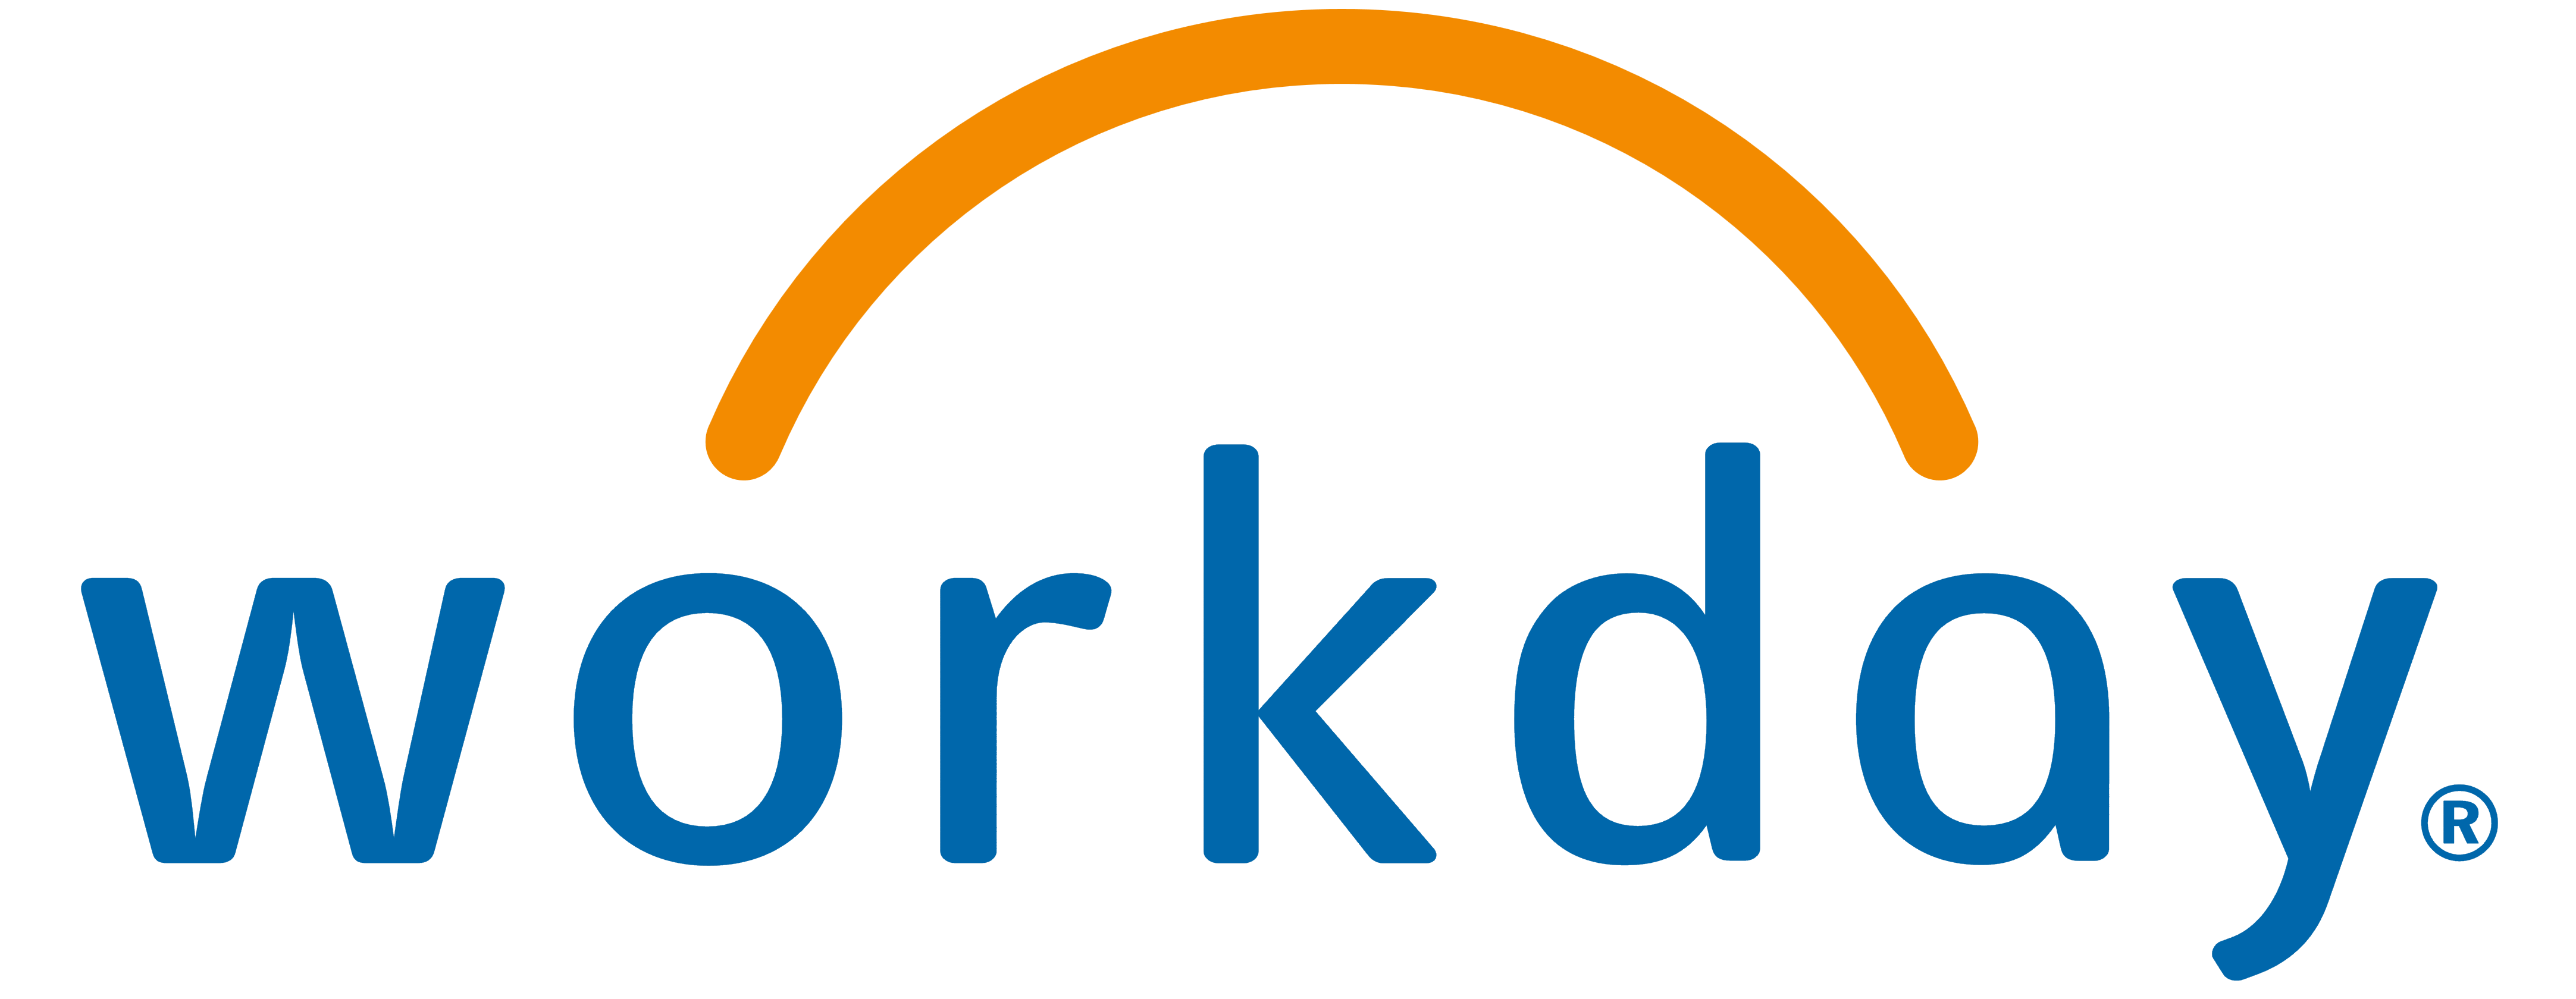 Workday partner logo